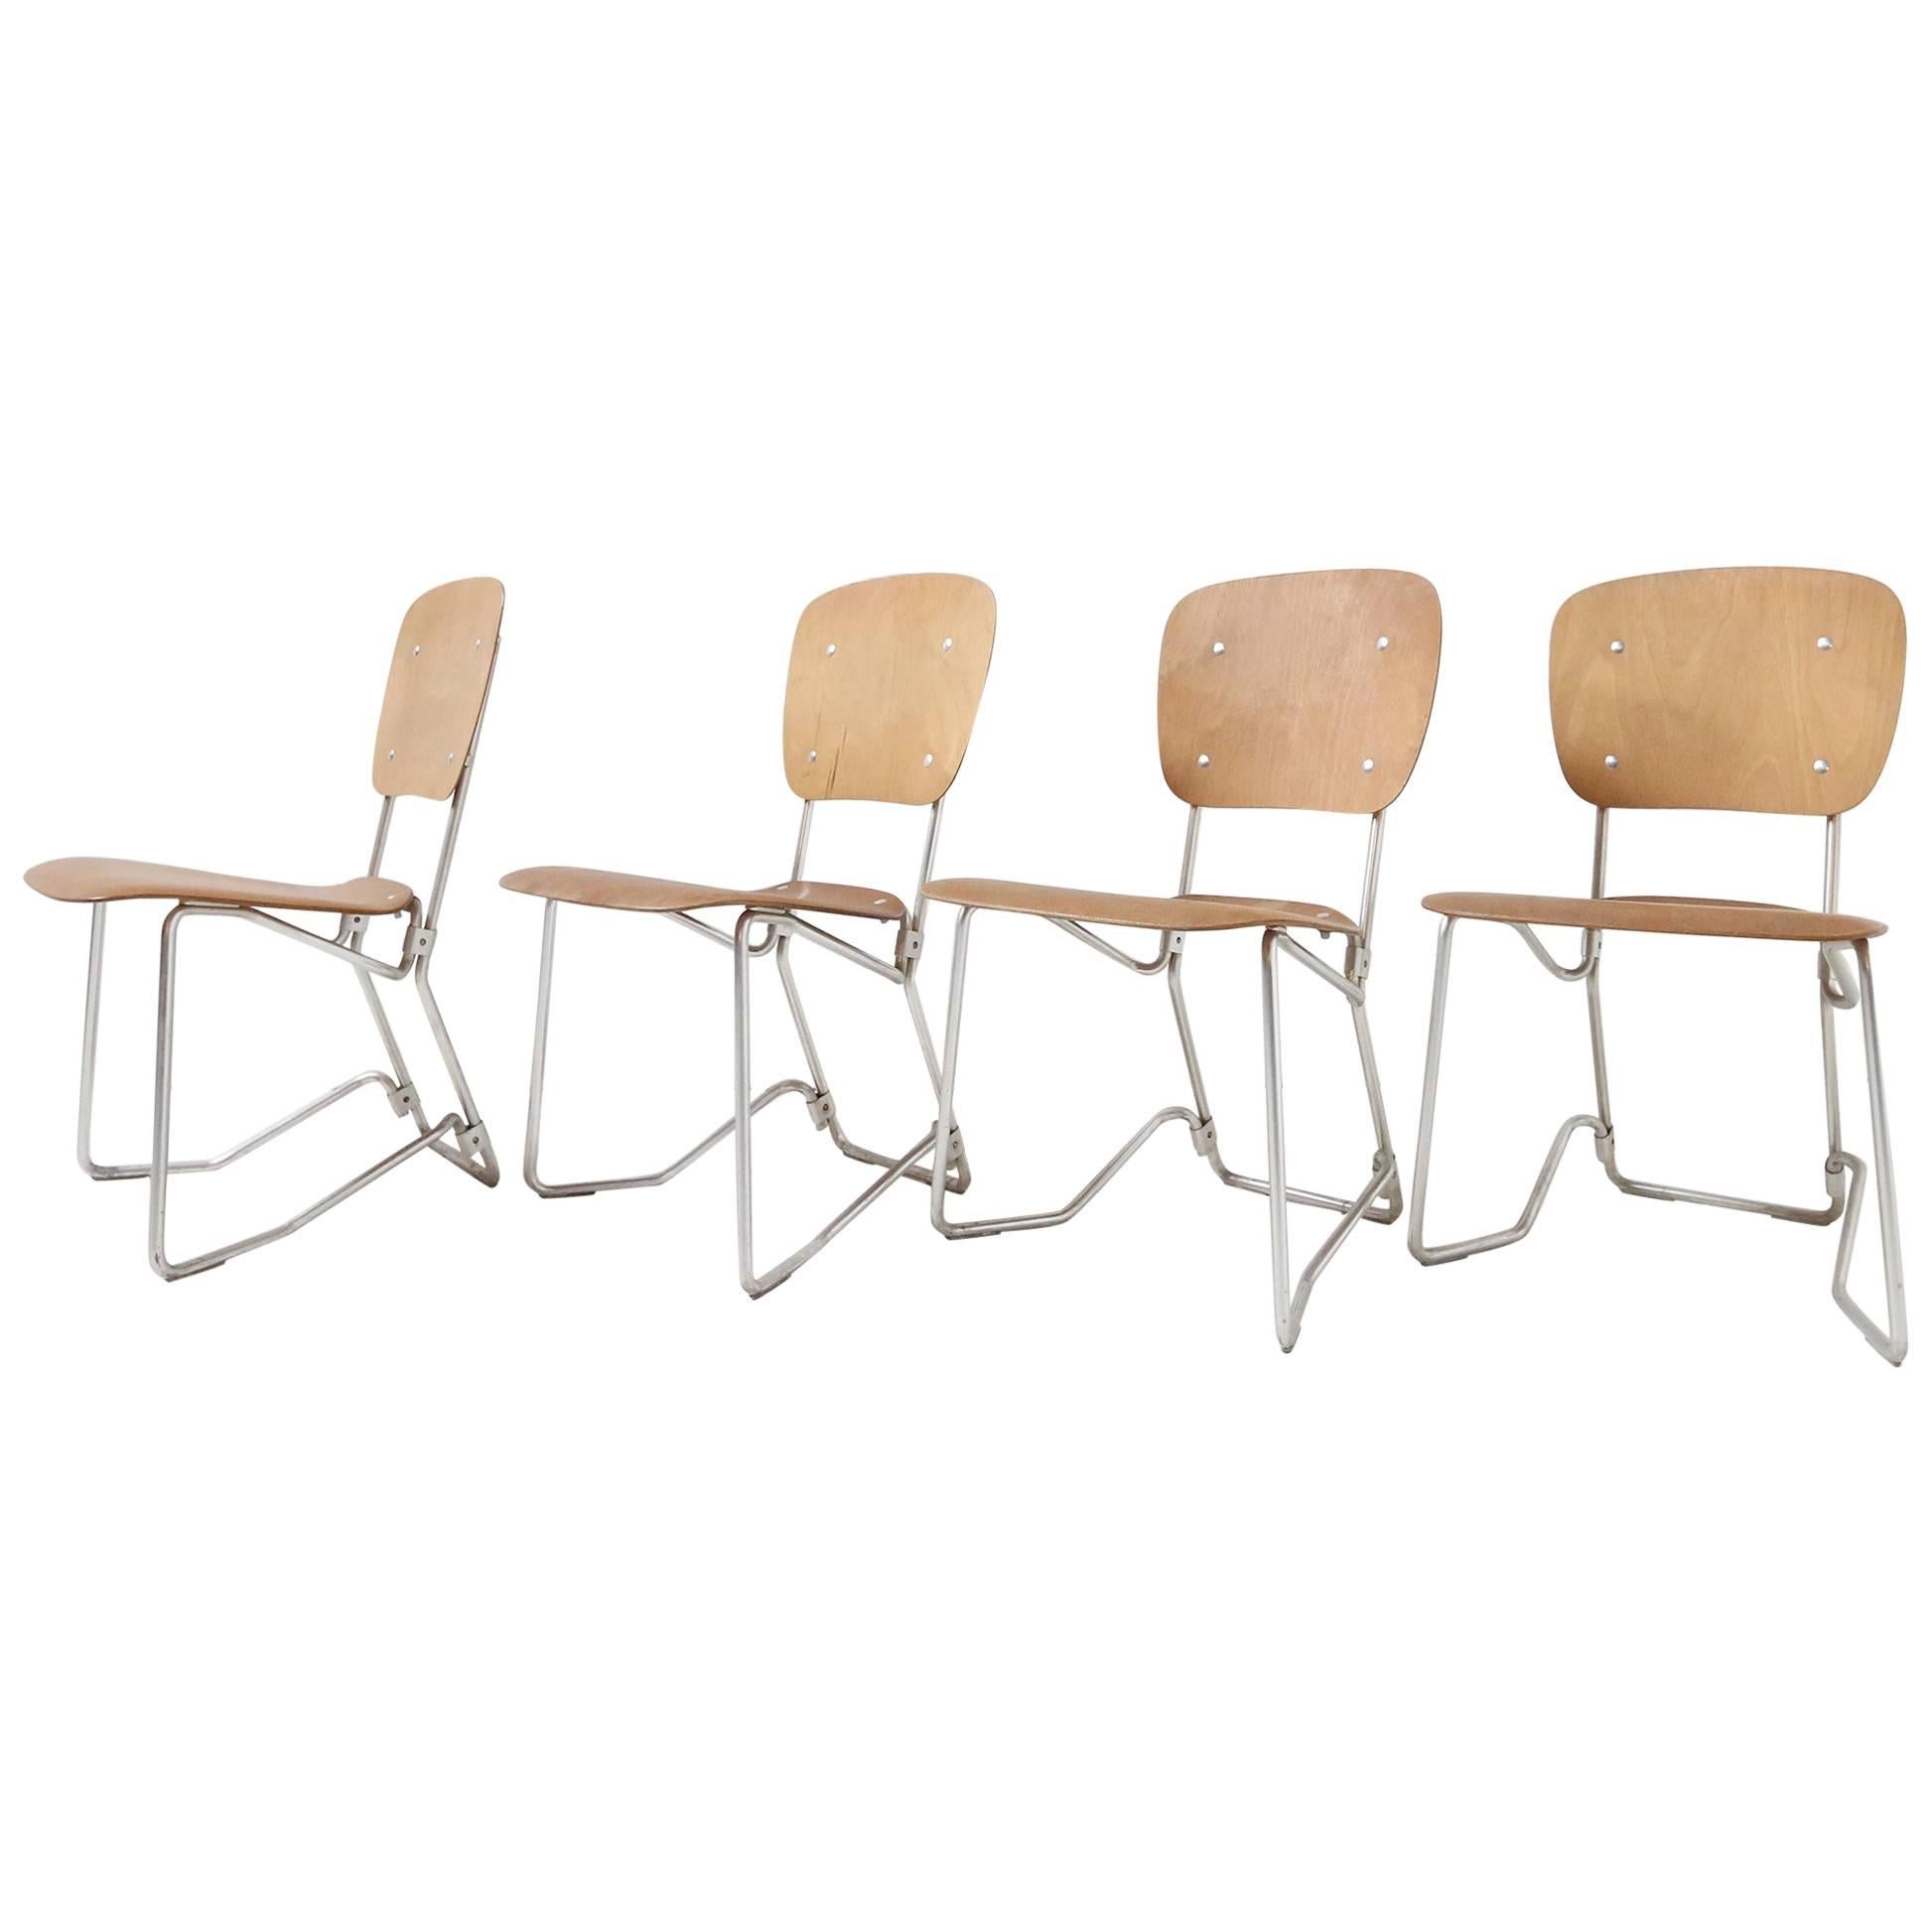 First Edition Aluflex Chairs by Armin Wirth Switzerland, 1950s For Sale